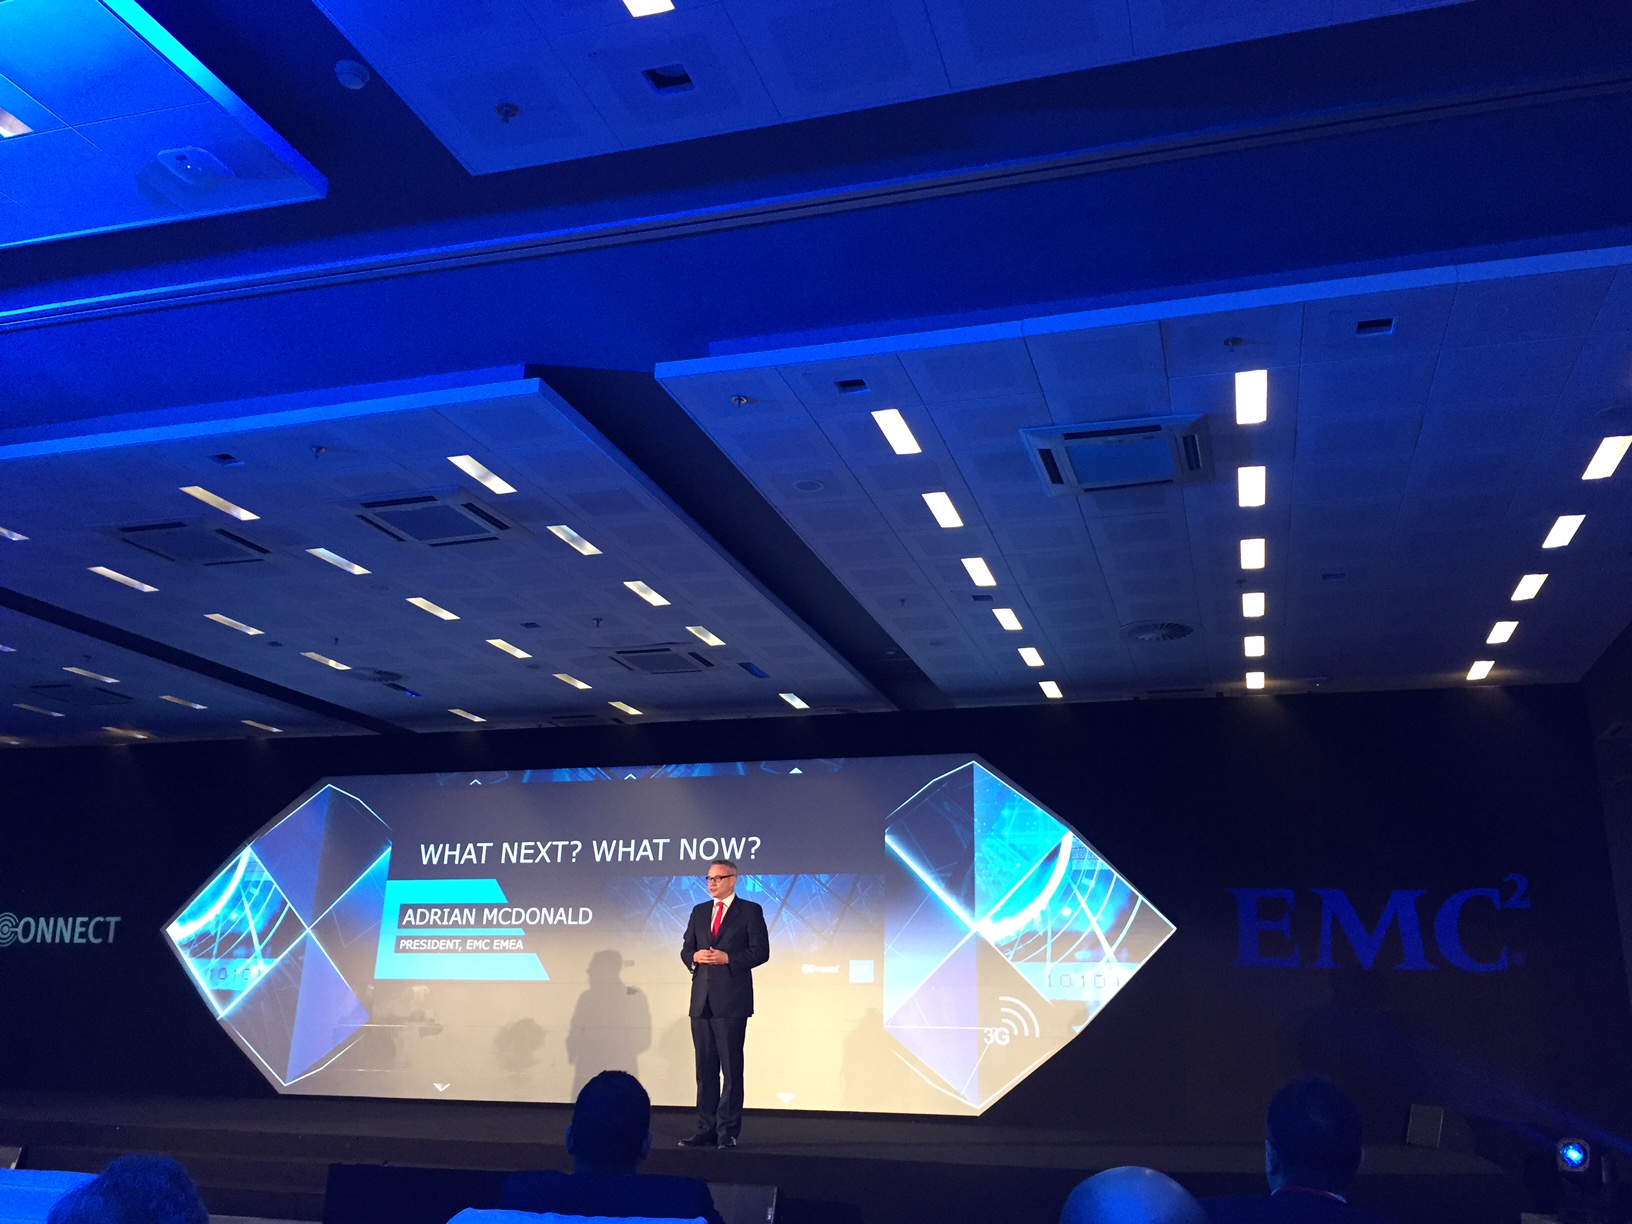 Annual CIO Connect Summit 2016 hosted by EMC in Abu Dhabi